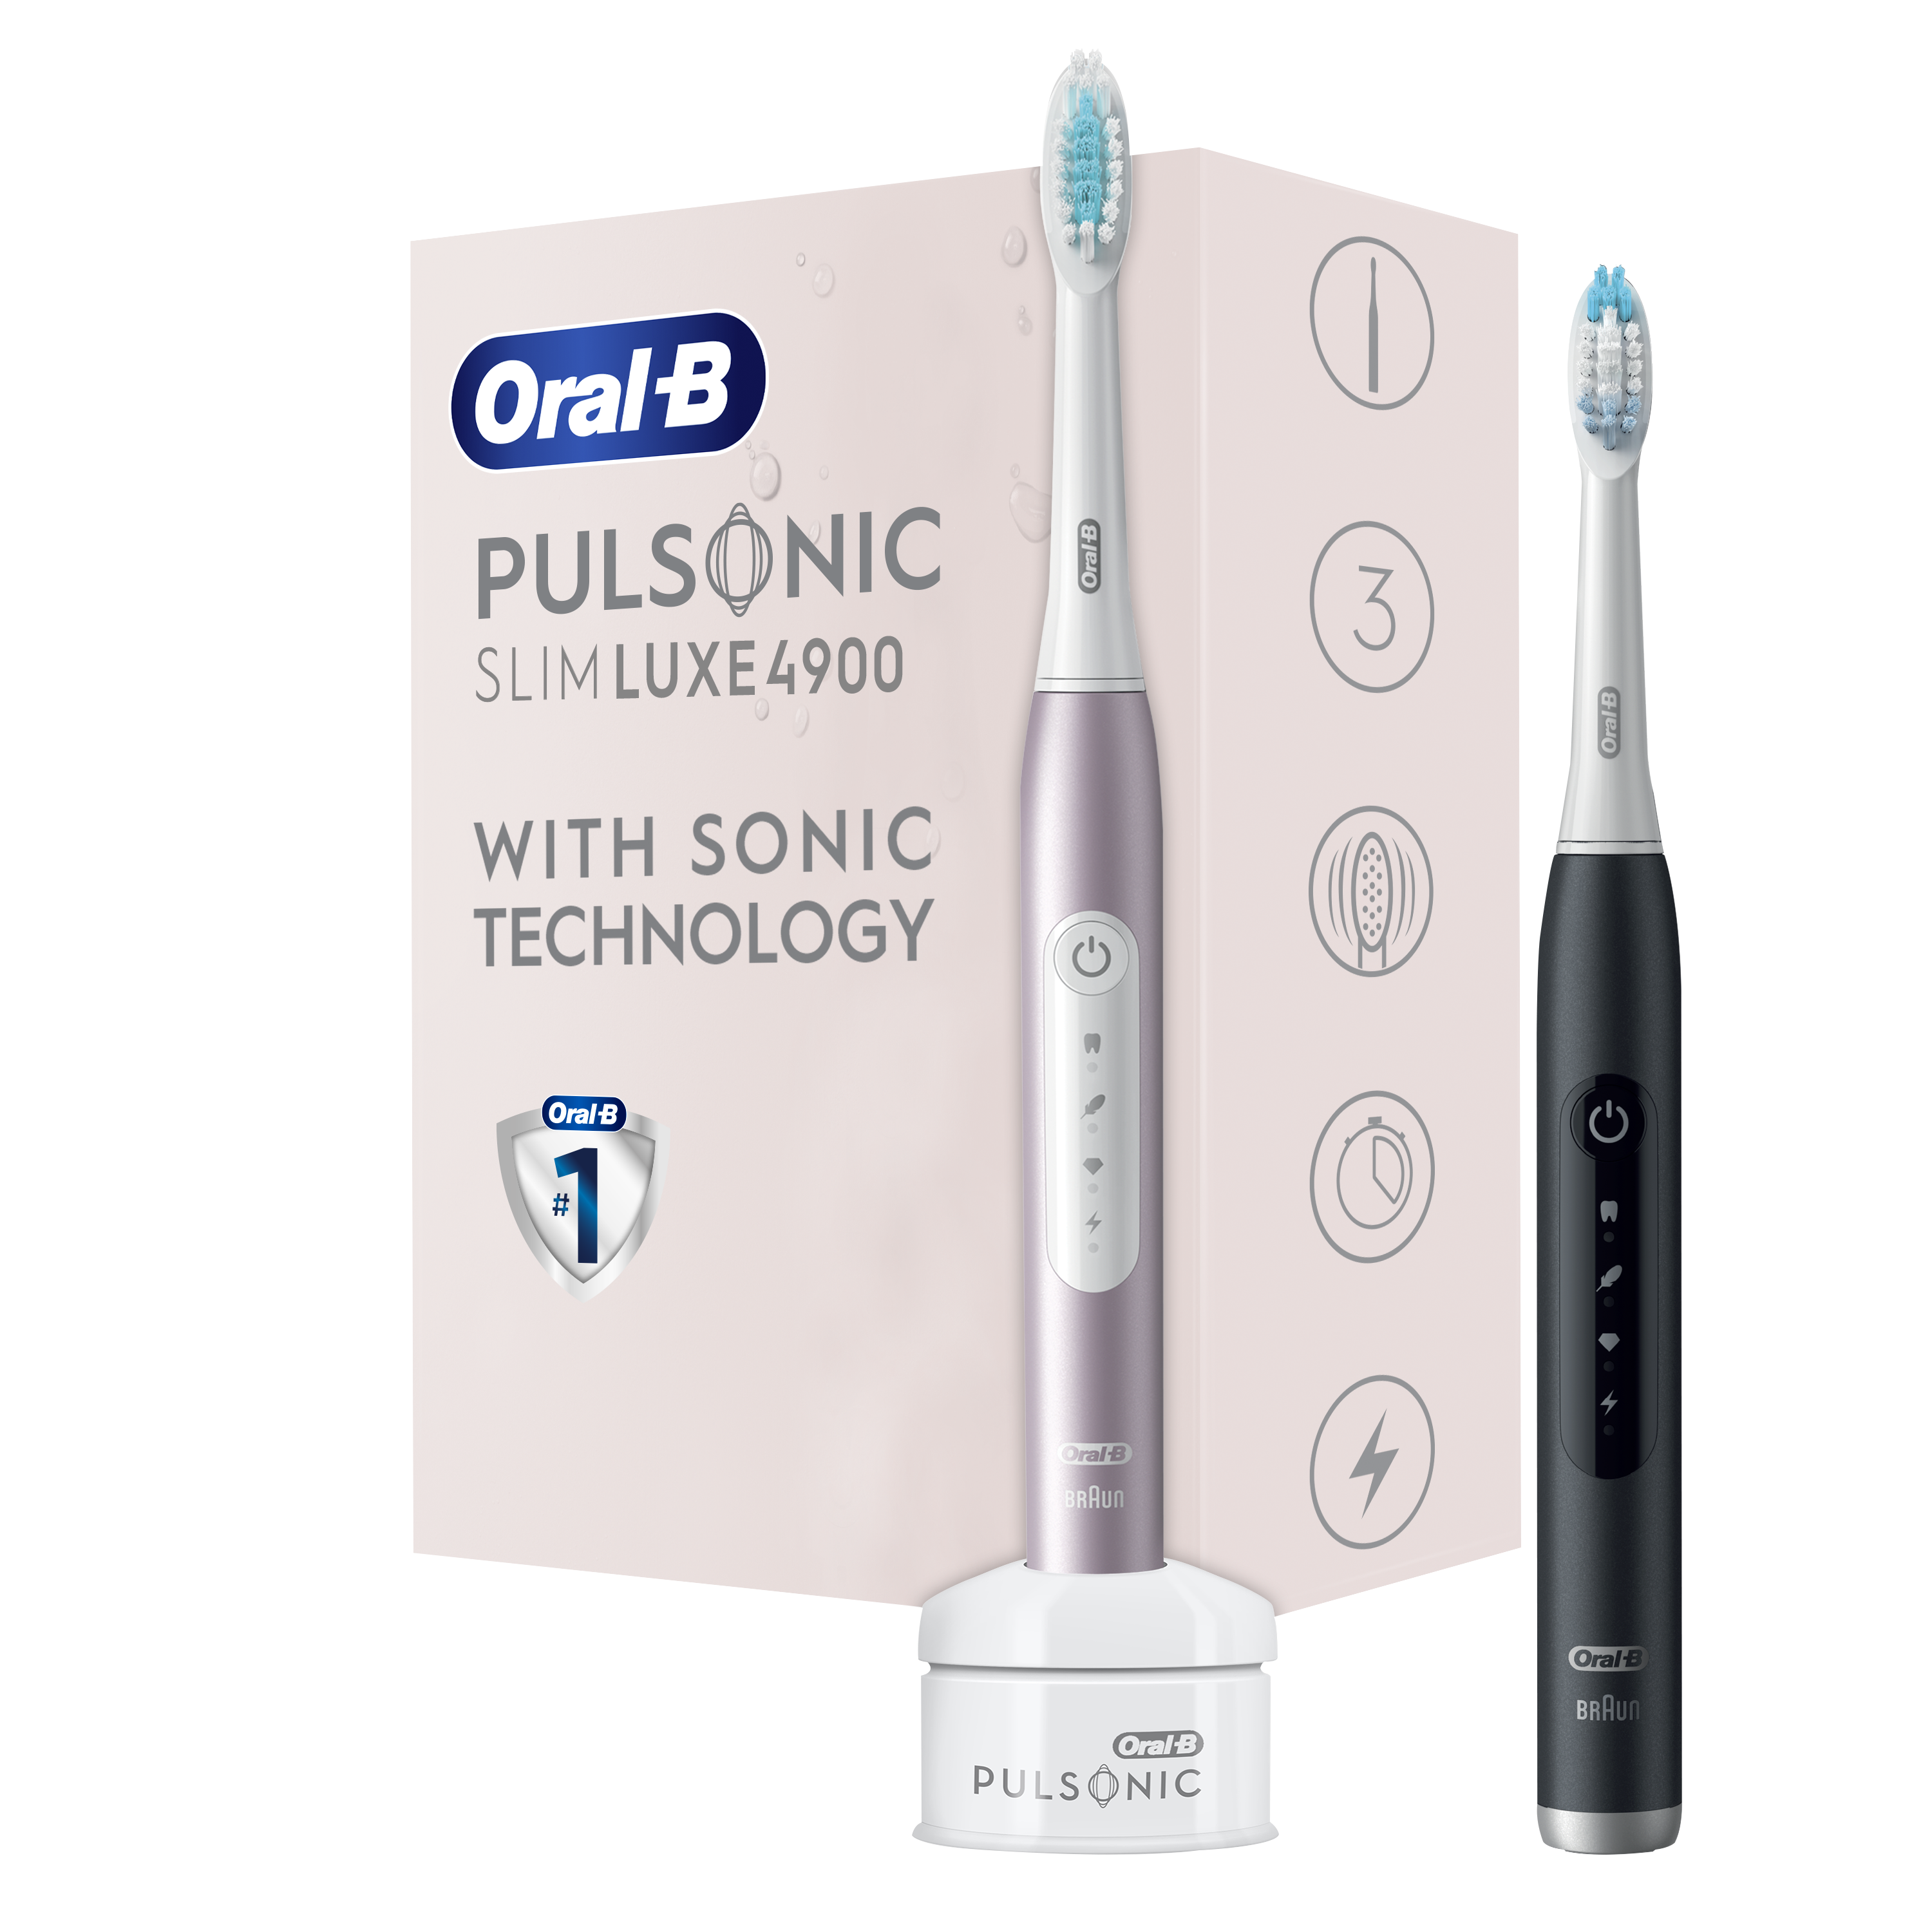 Электрическая зубная щётка Oral-B Pulsonic Slim Luxe 4900 S411.526.3H типа 3717, 2 шт. - фото 3